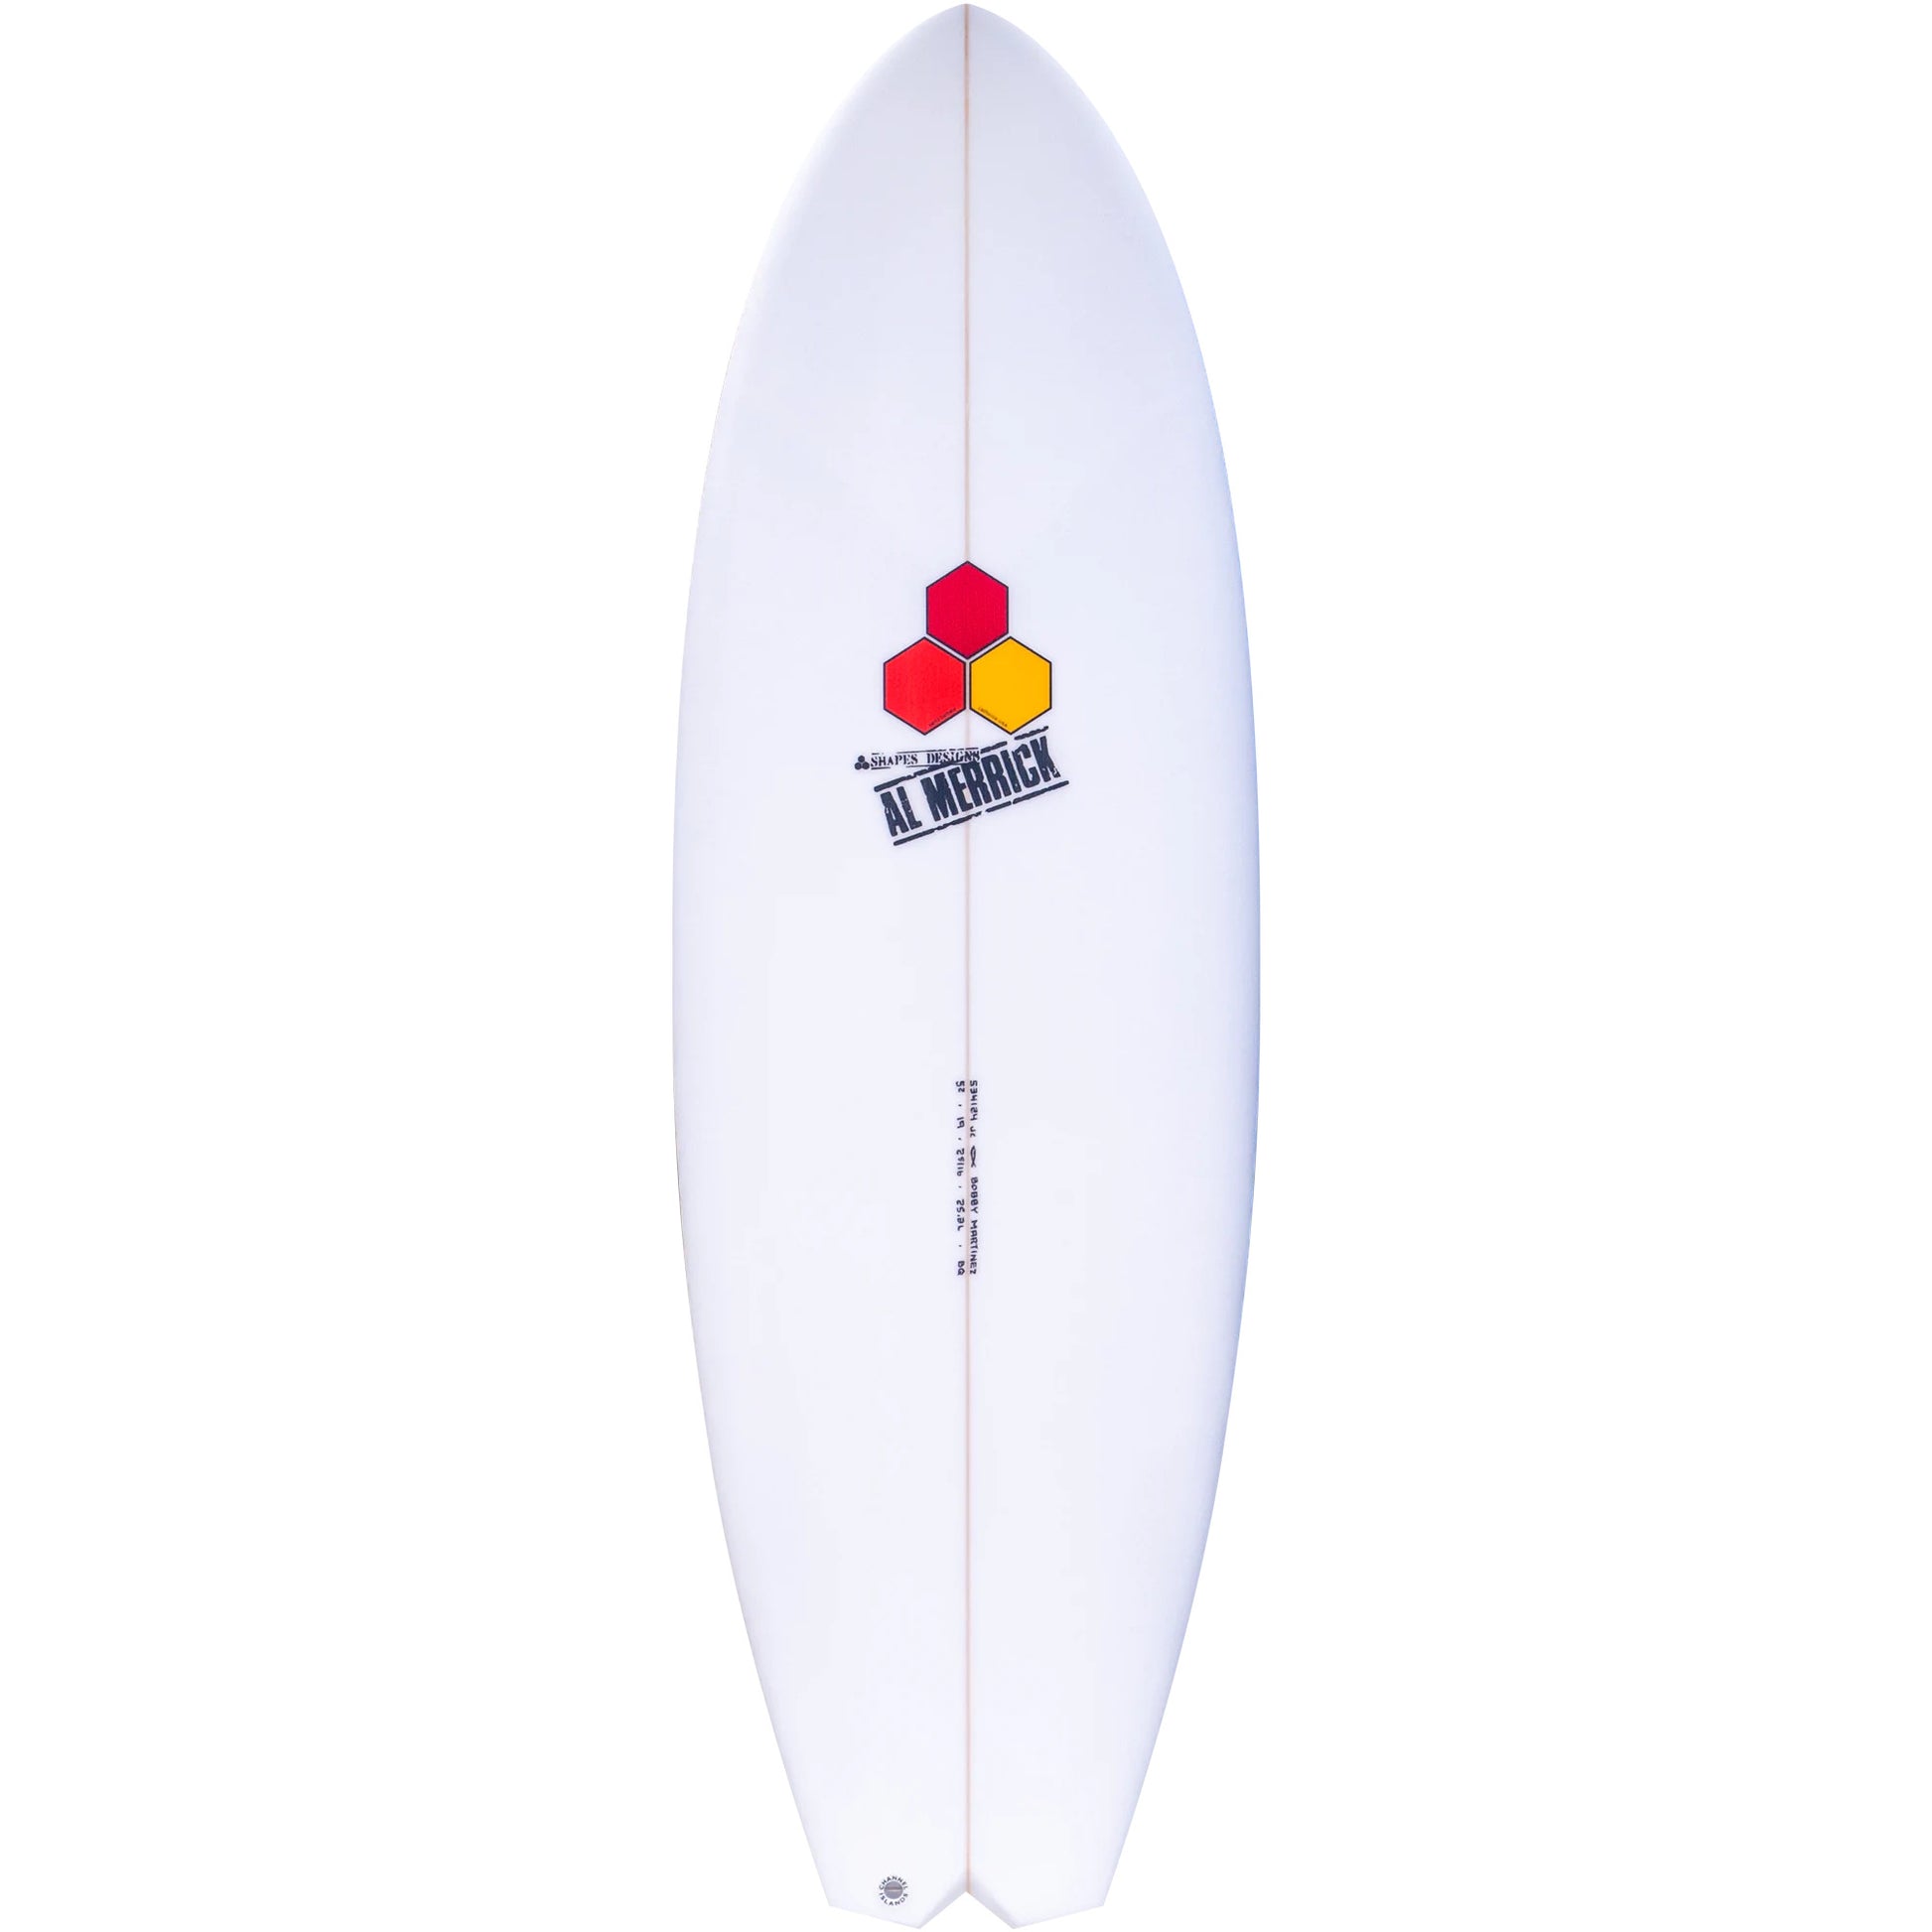 Channel-islands-surfboards-bobby-quad-deck-shortboard-hybrid-pre-order-custom-galway-ireland-blacksheepsurfco